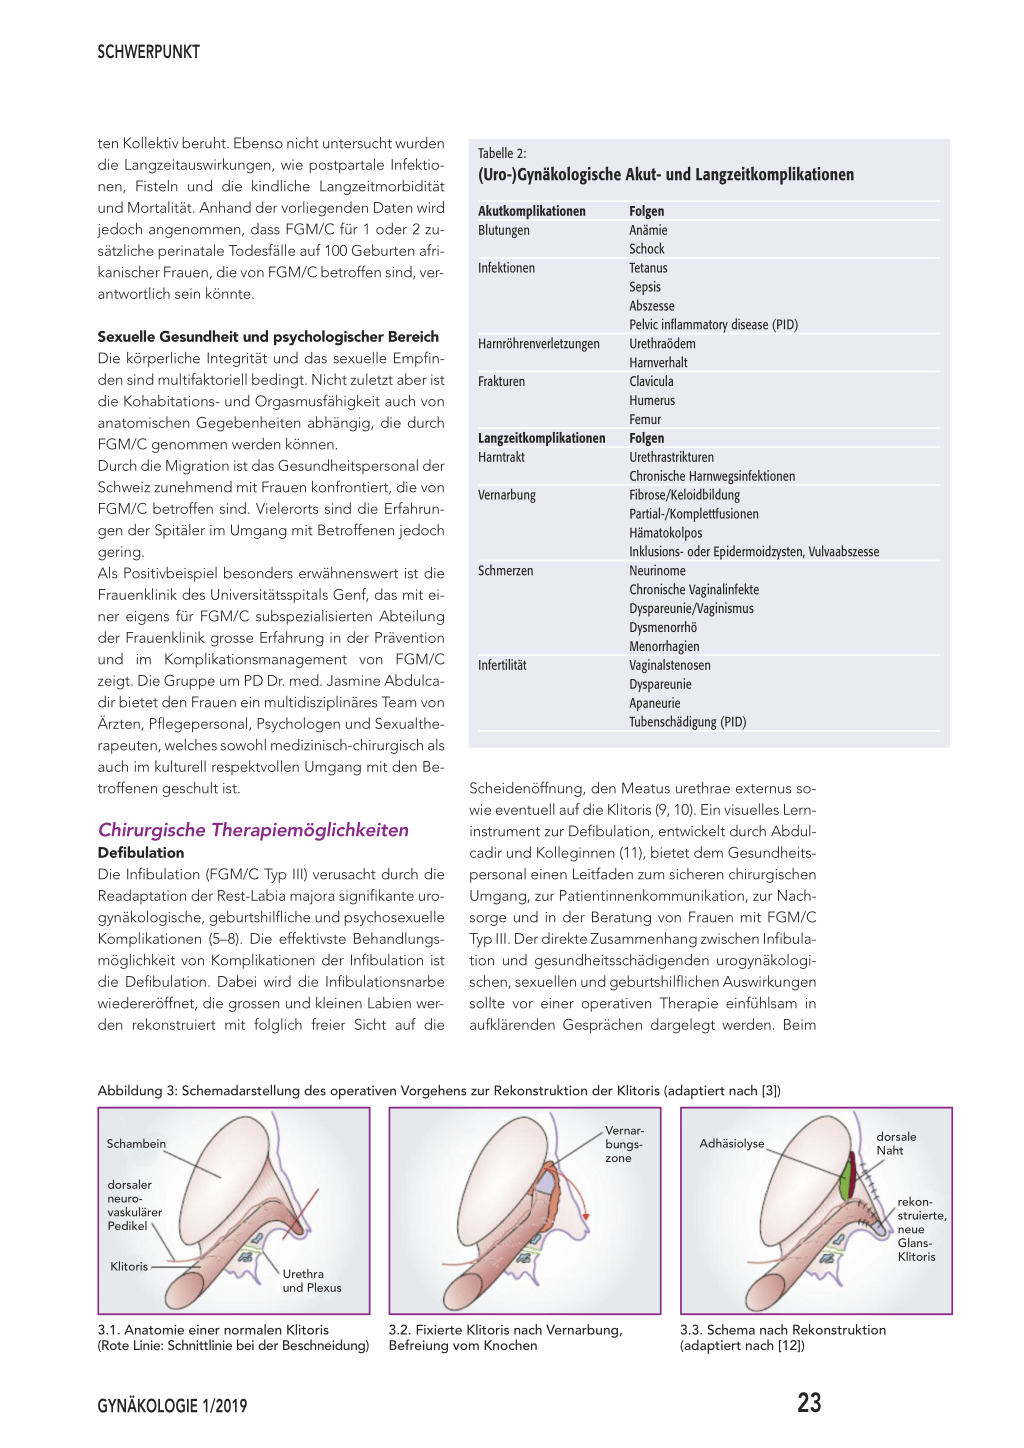 Beschneidung klitoris Category:Female genital